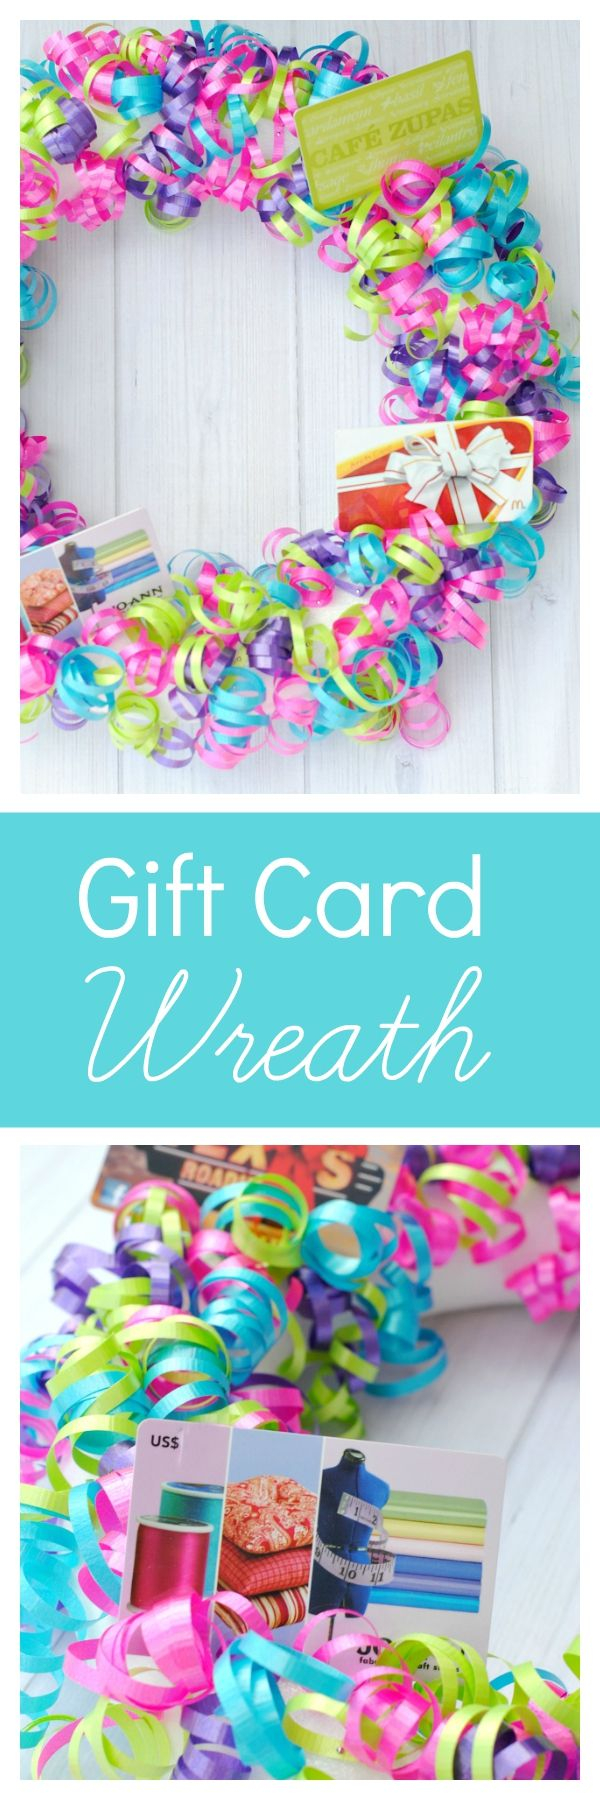 Birthday Gift Card Ideas Birthday Gifts Creative Gift Card Ideas This Gift Card Wreath Is A